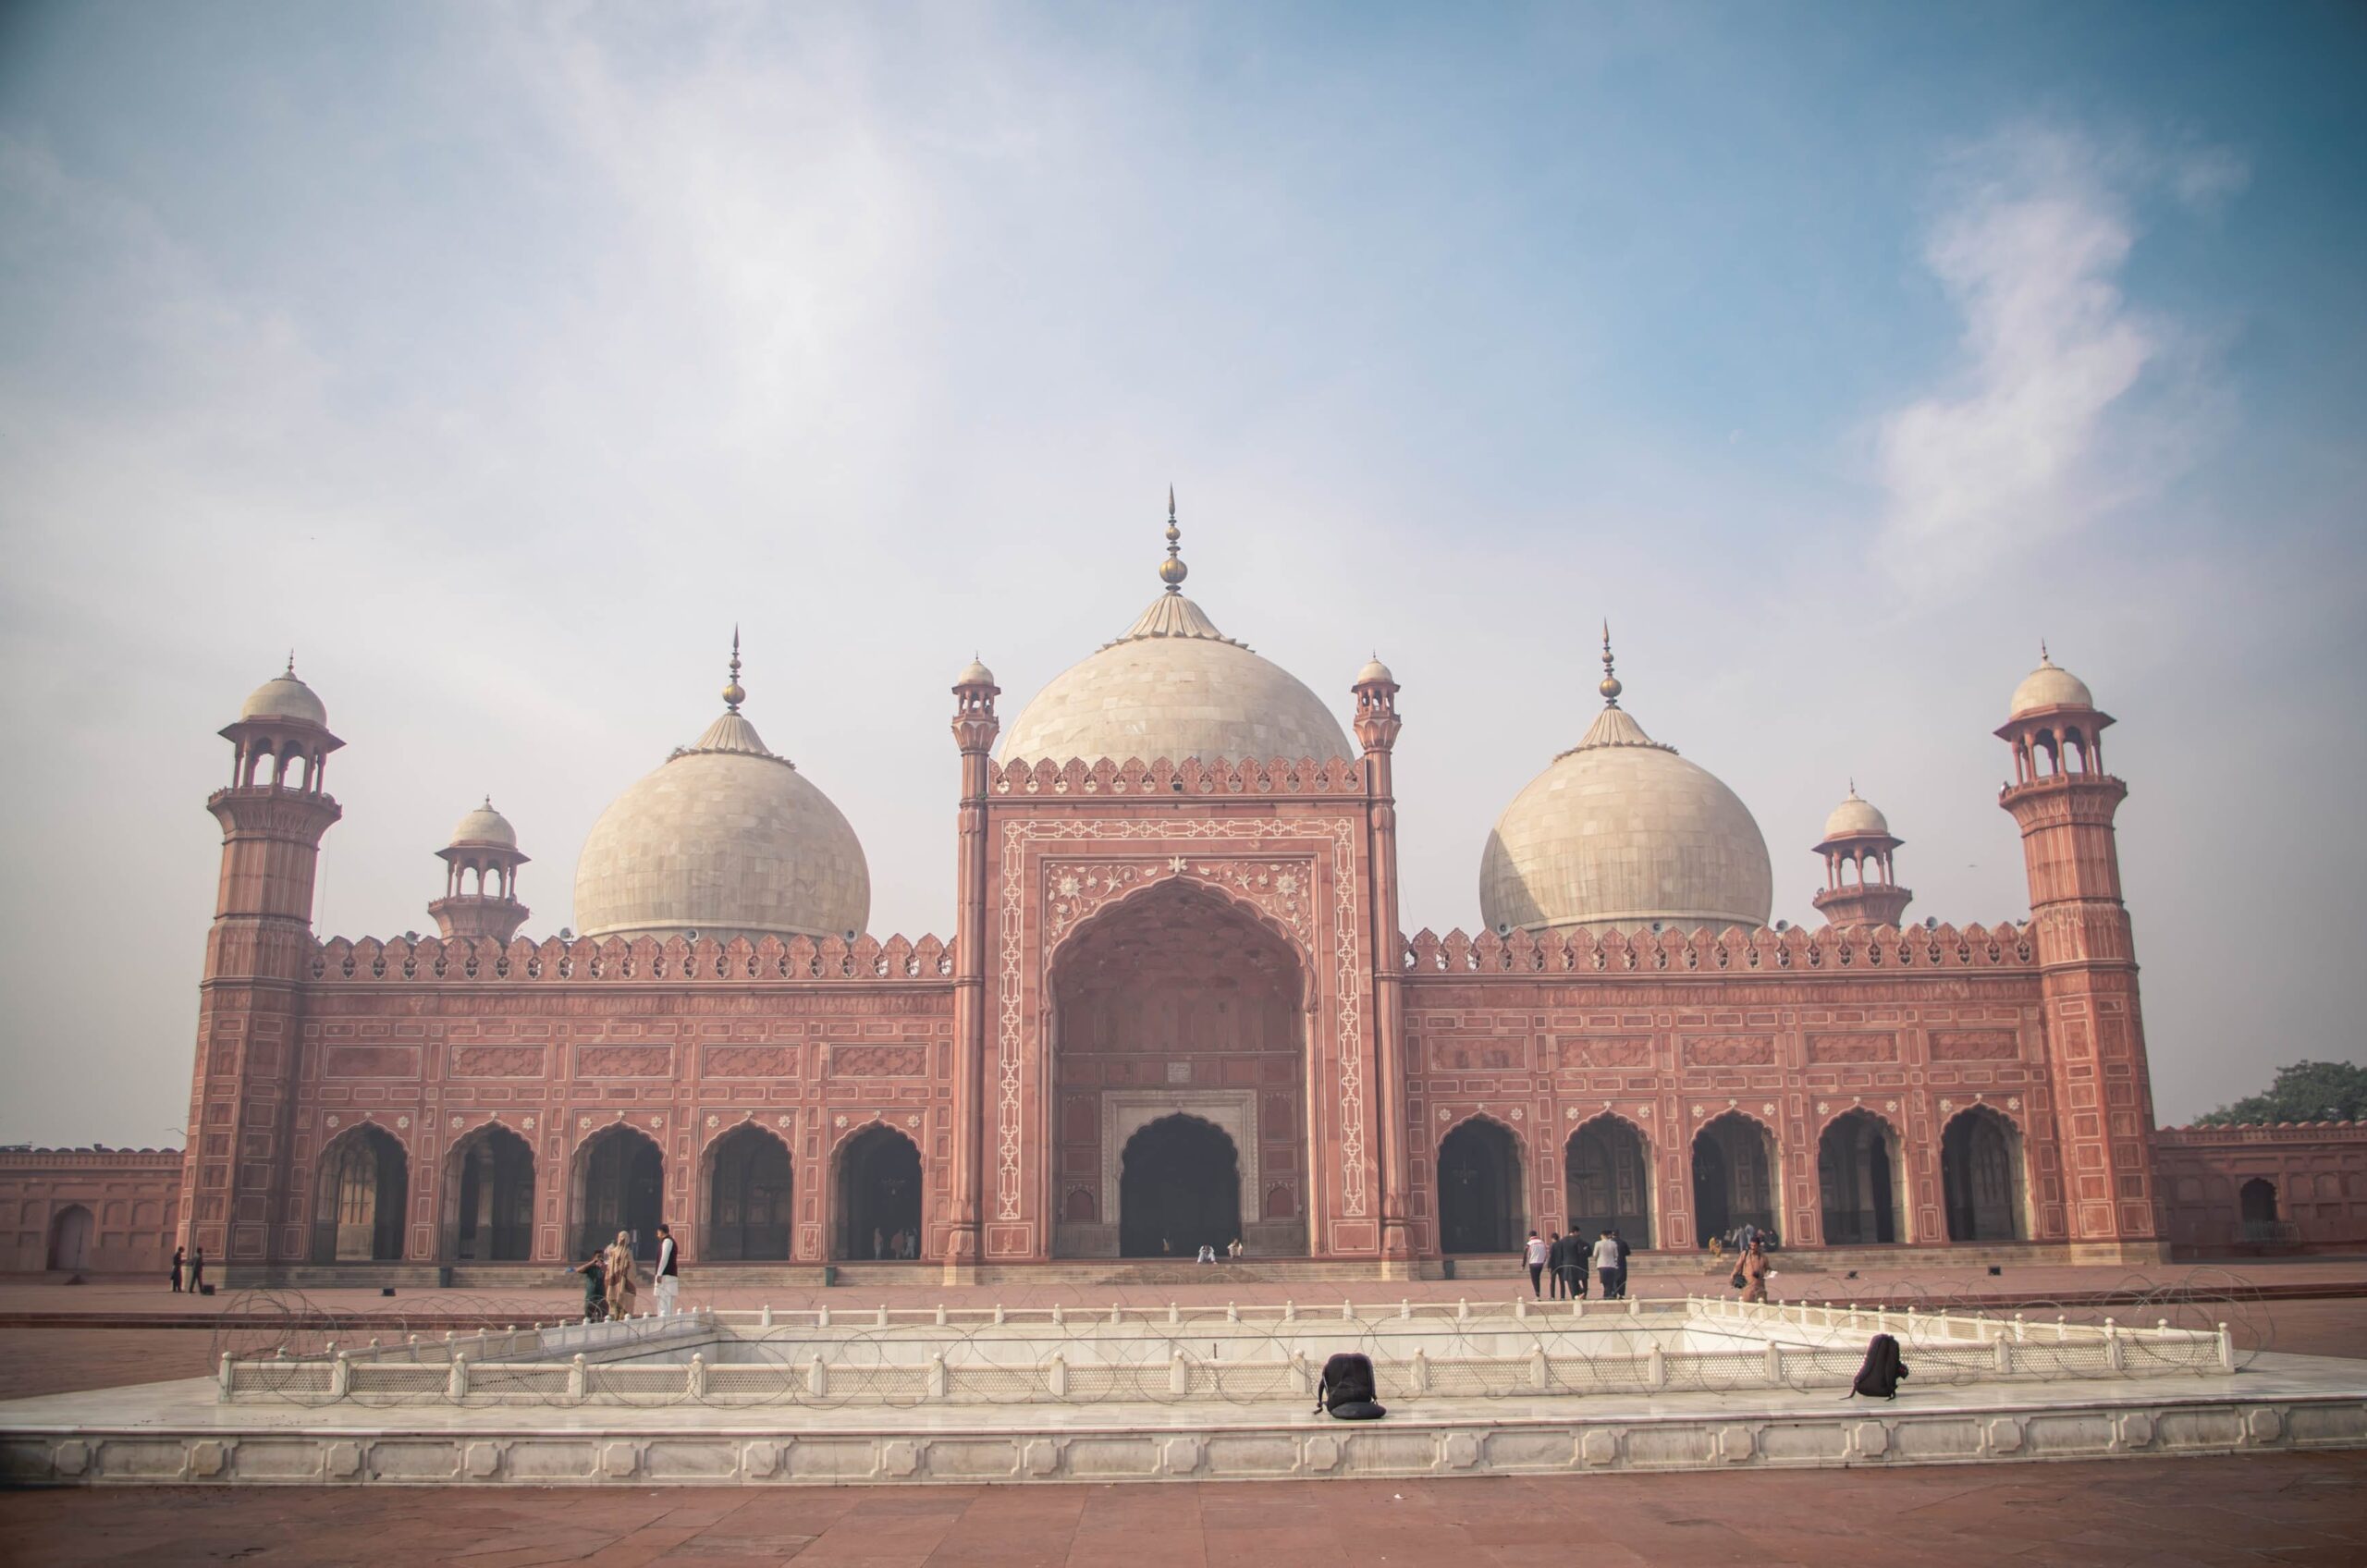 Badshahi Mosque, Walled City of Lahore, Lahore, Pakistan (1)